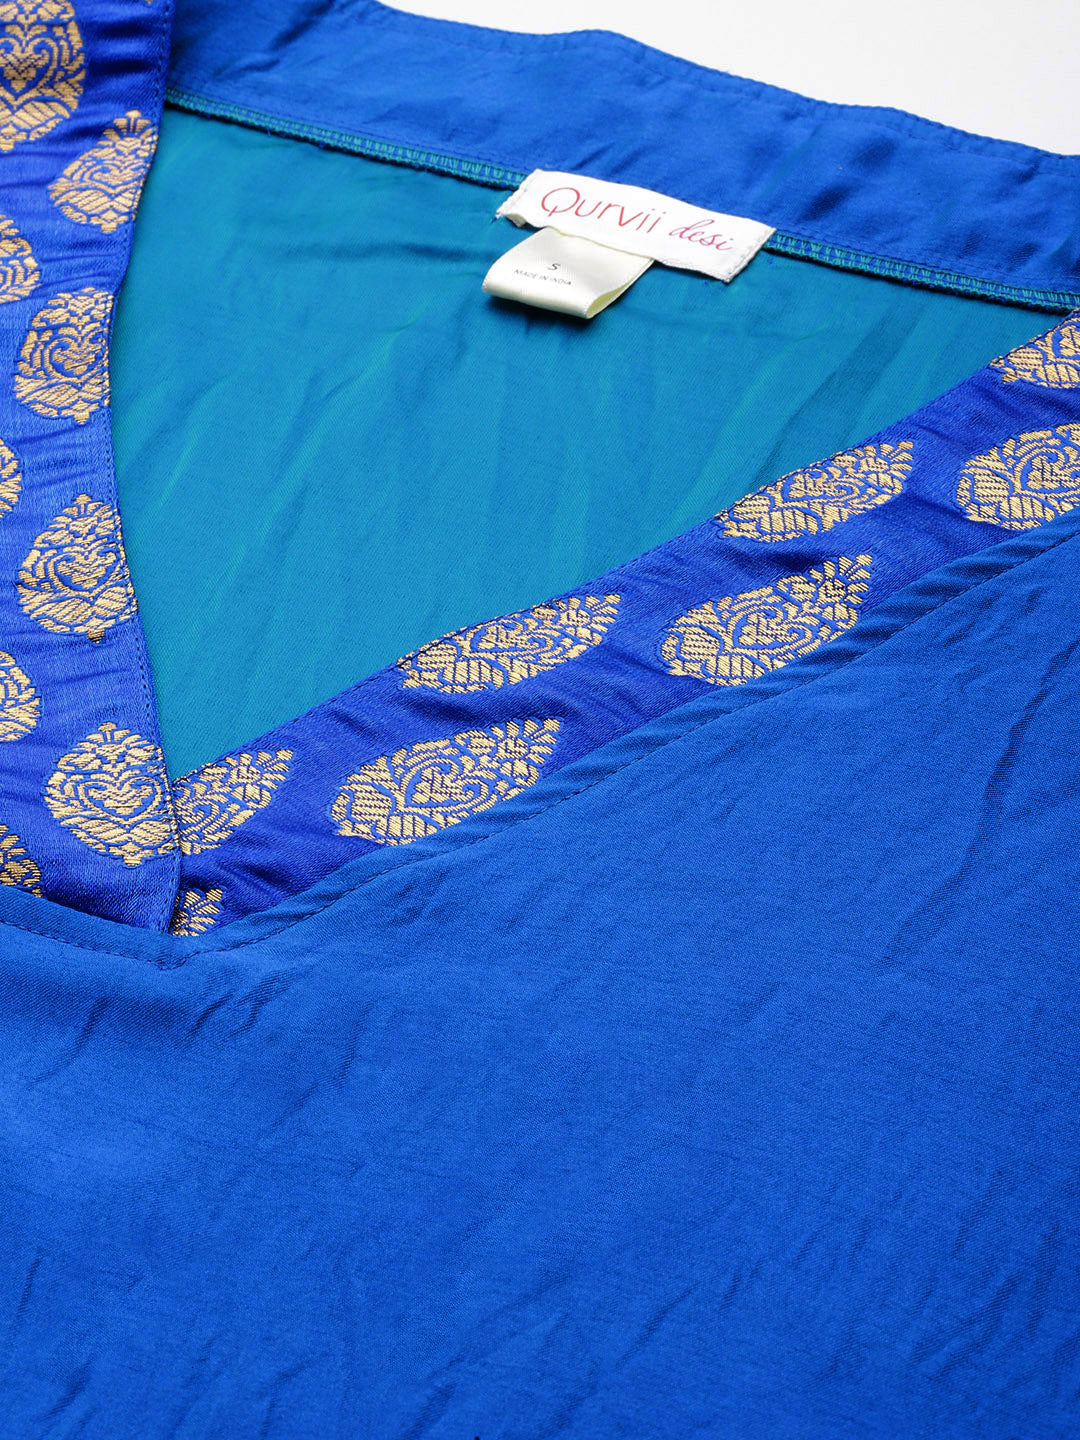 Royal Blue silk Kimono dress with brocade